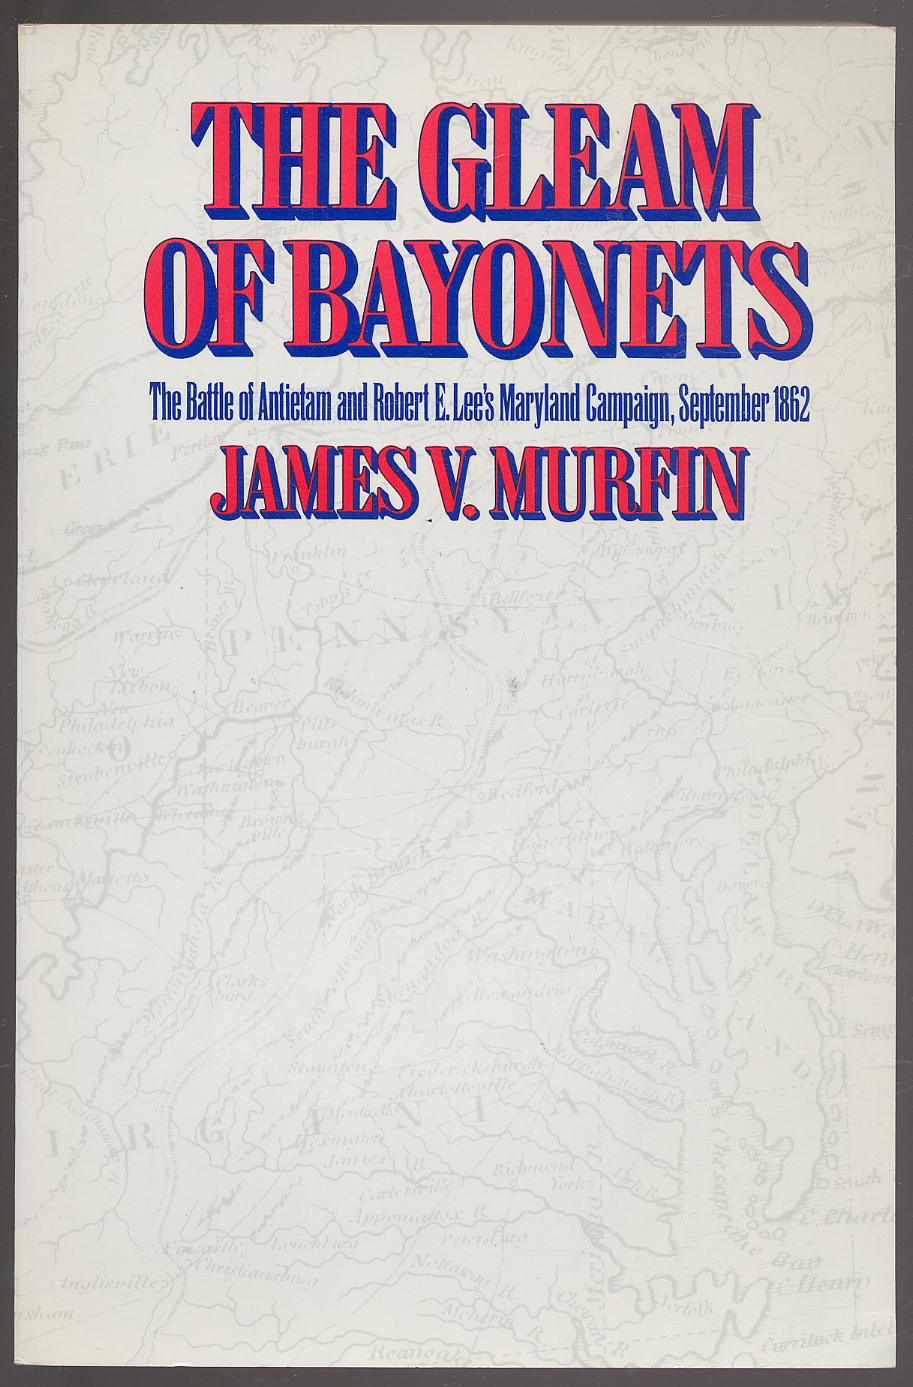 The Gleam of Bayonets: Battle of Antietam, September 17, 1862